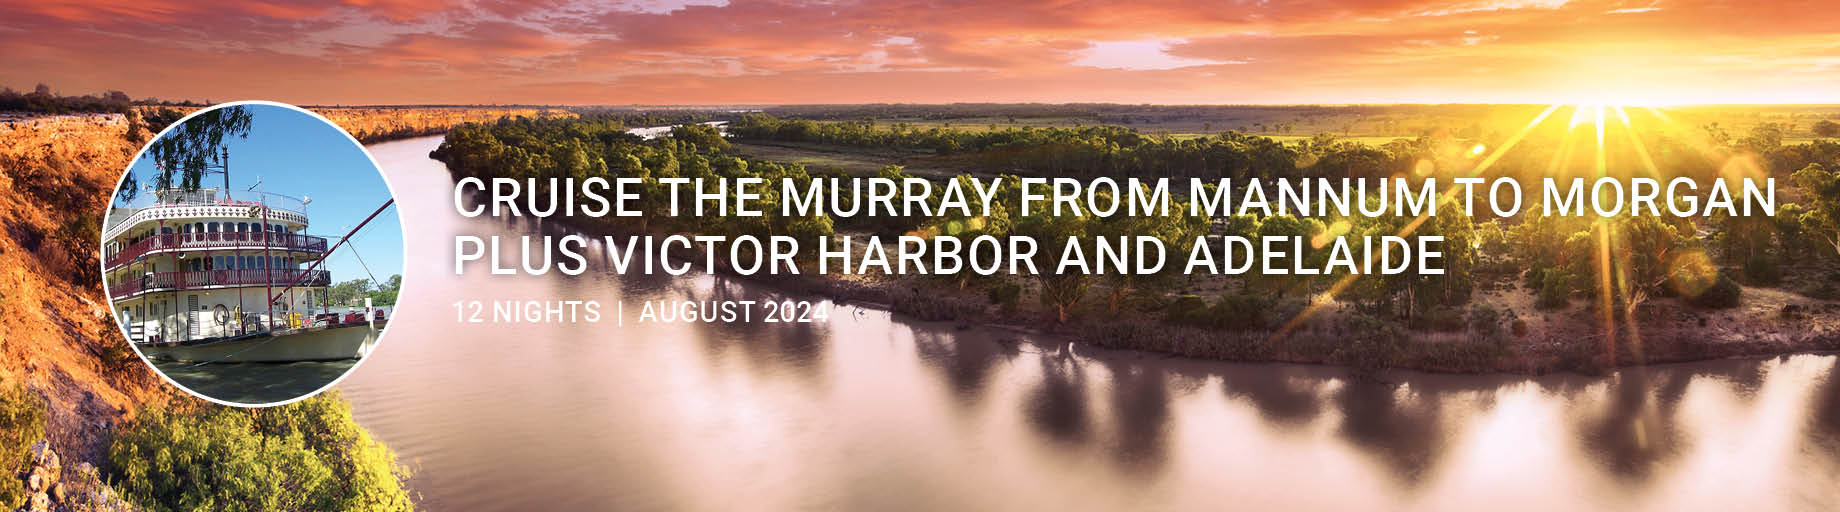 RMurray River Cruise & South Australia Exploration